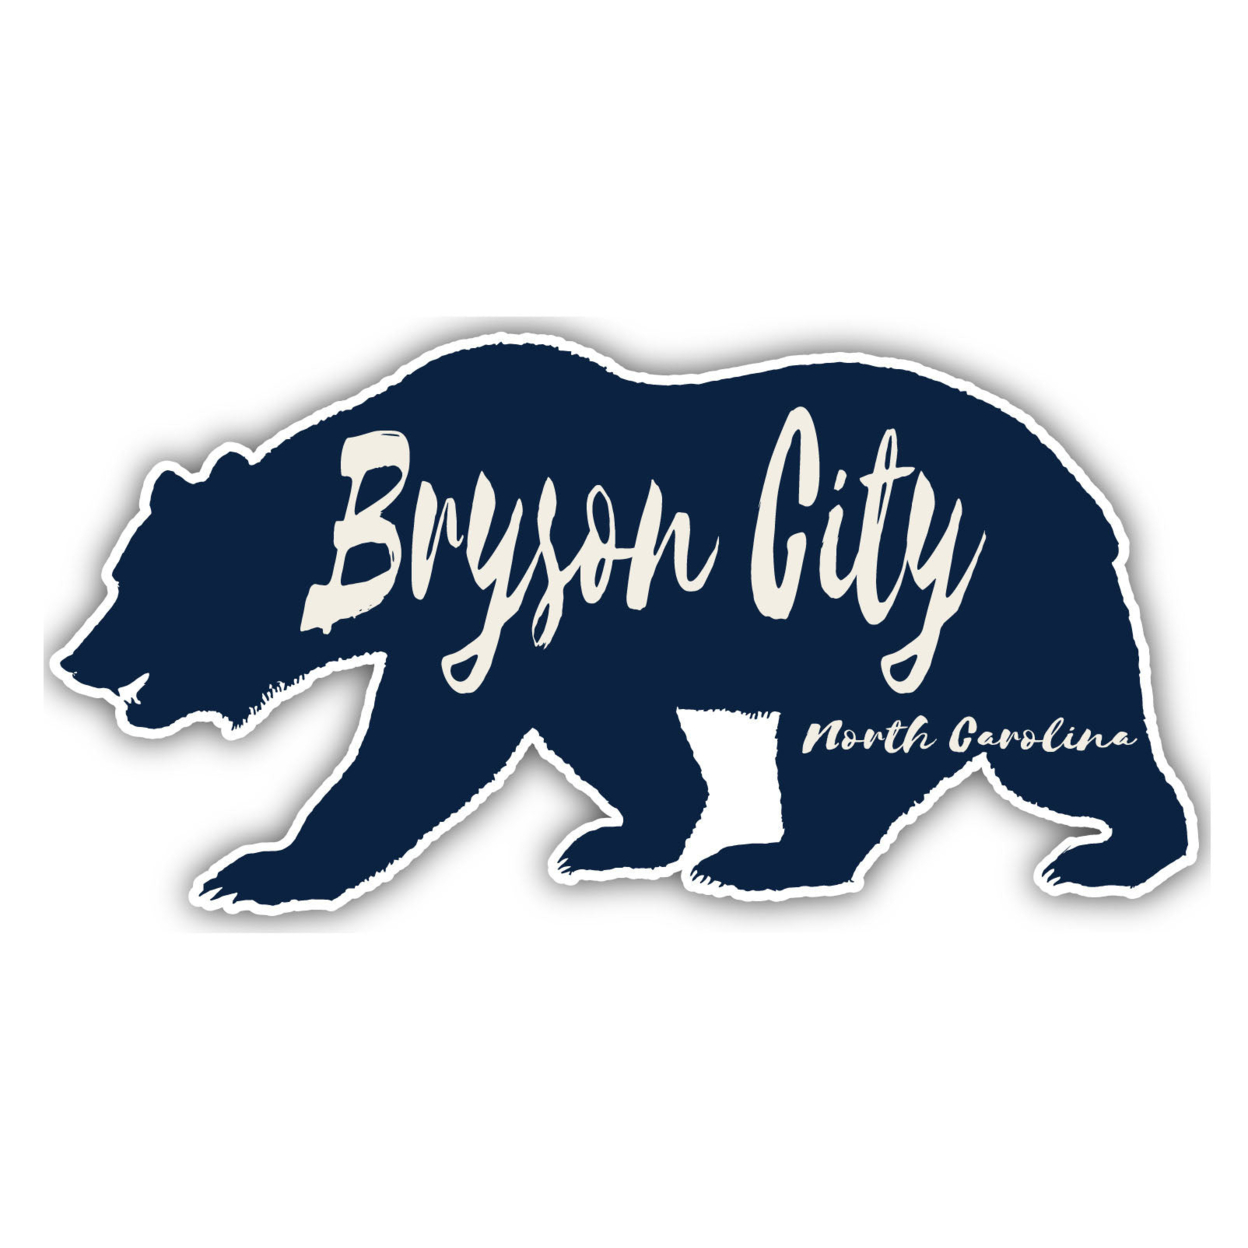 Bryson City North Carolina Souvenir Decorative Stickers (Choose Theme And Size) - 4-Pack, 6-Inch, Bear